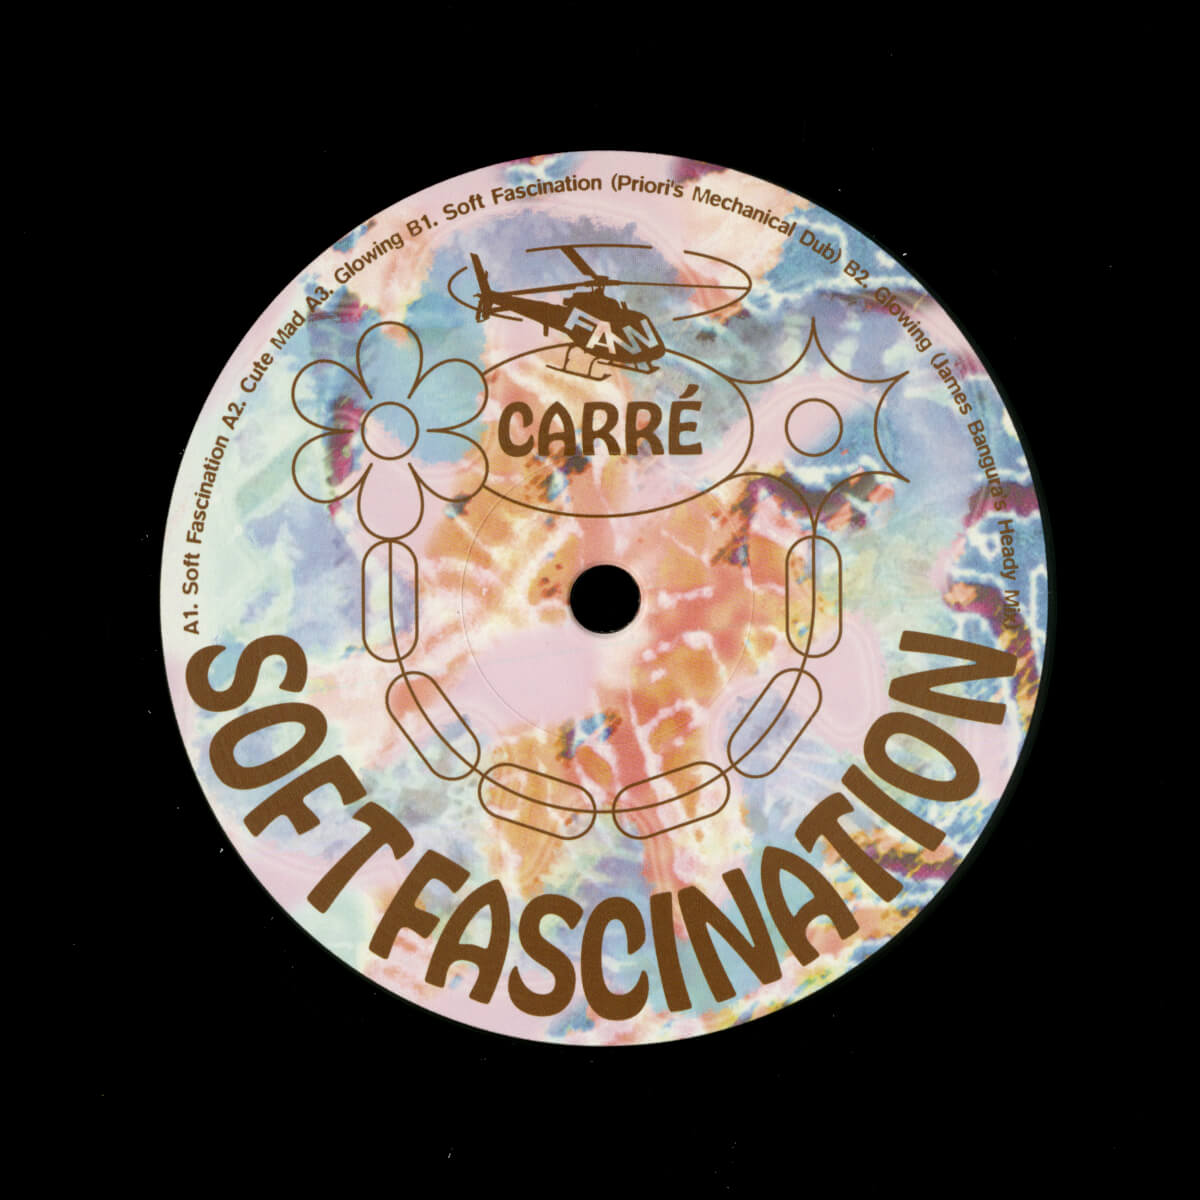 Carré – Soft Fascination EP (w Priori / James Bangura Remixes)